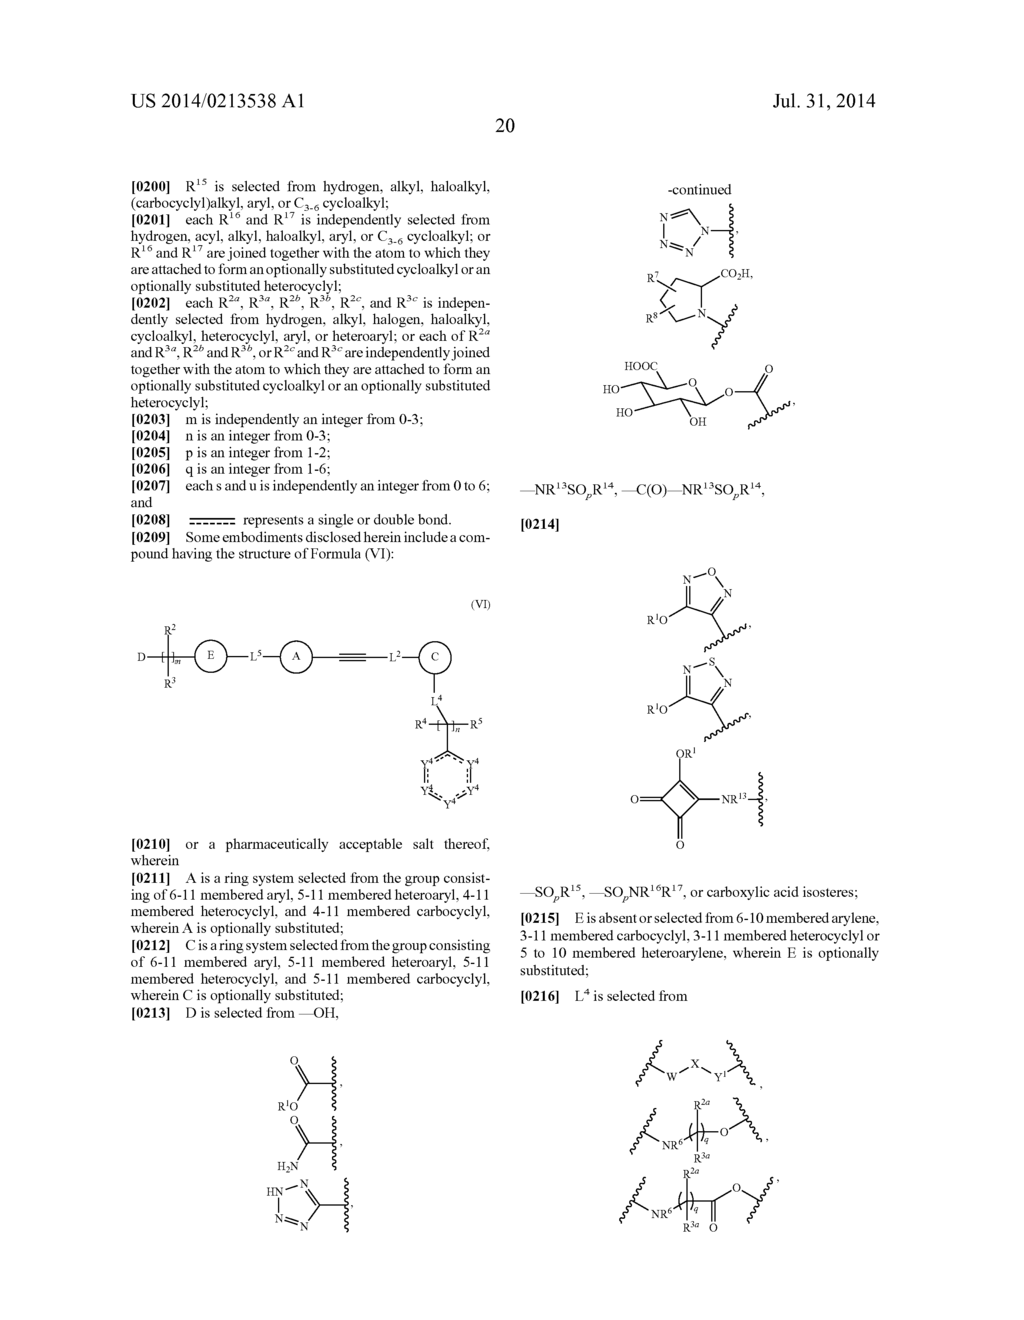 LYSOPHOSPHATIDIC ACID RECEPTOR ANTAGONISTS - diagram, schematic, and image 21